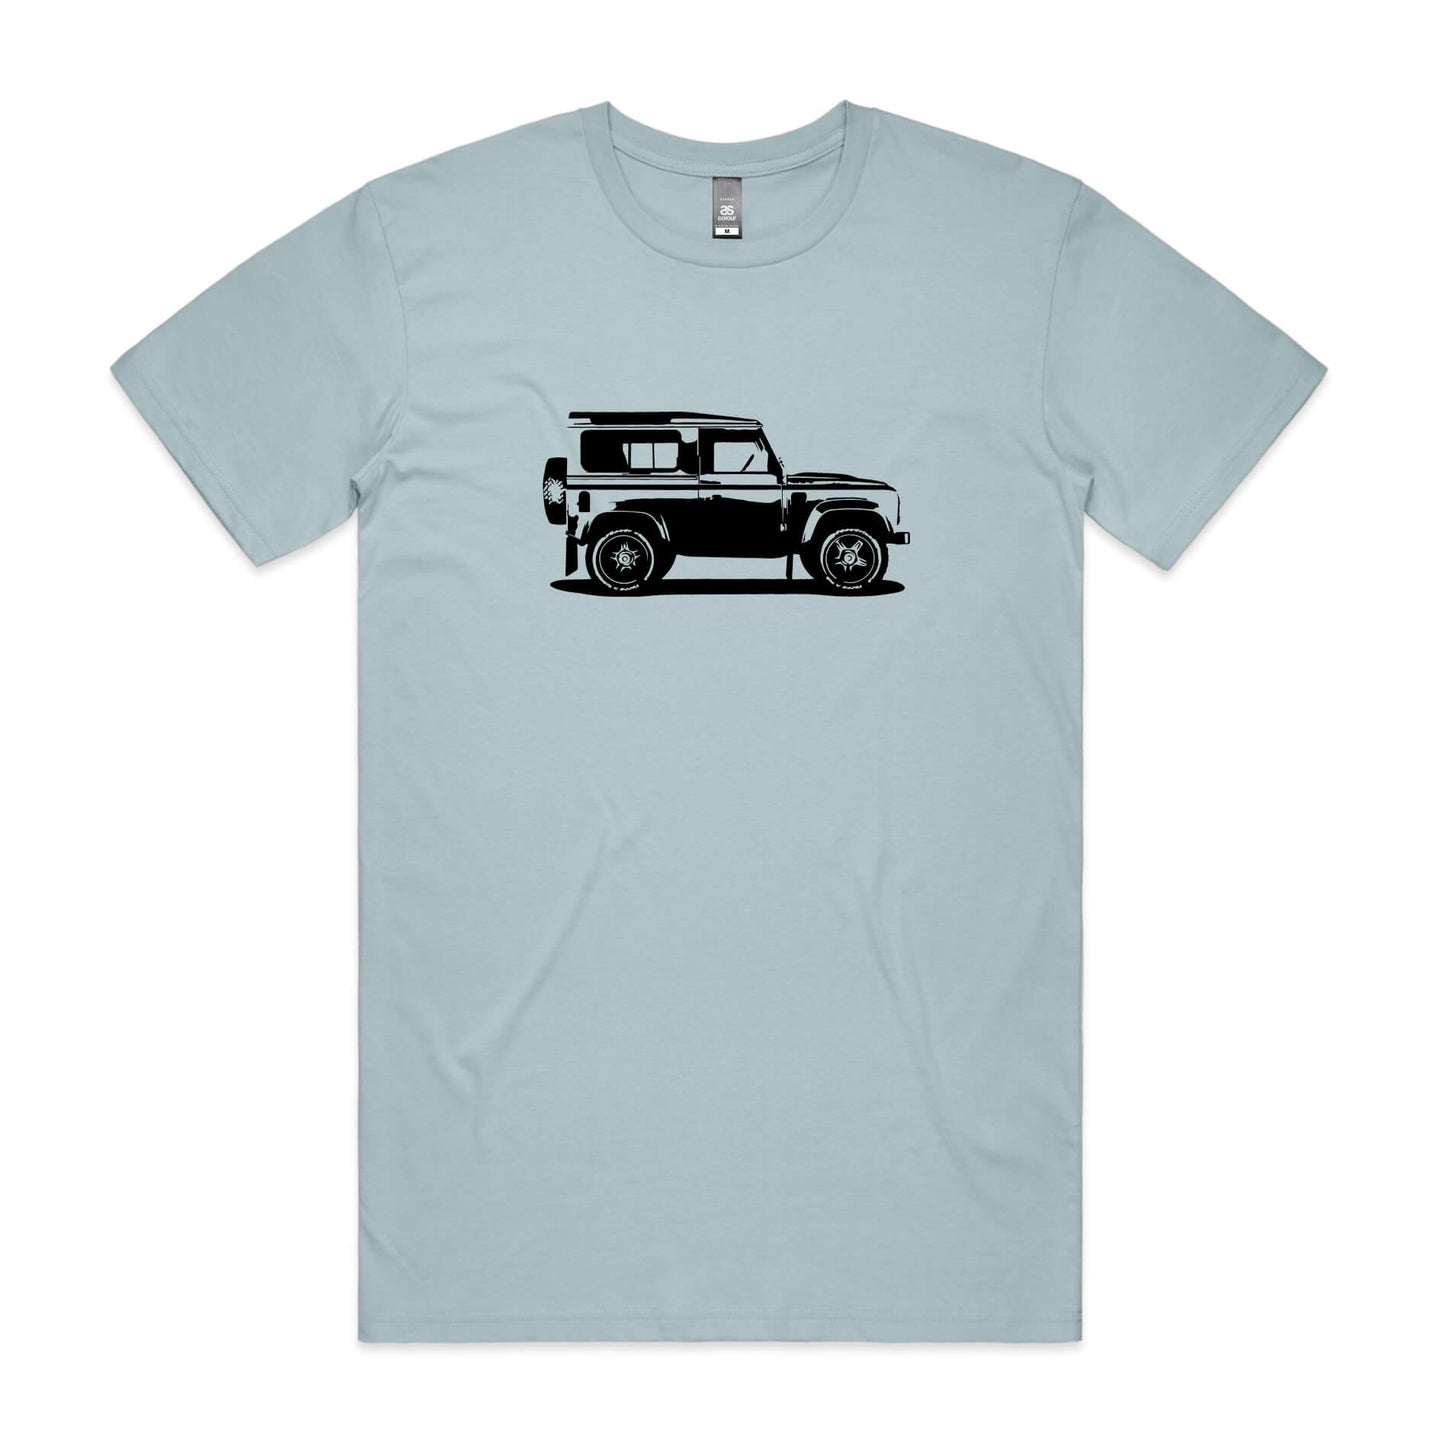 Land Rover Defender t-shirt in light blue